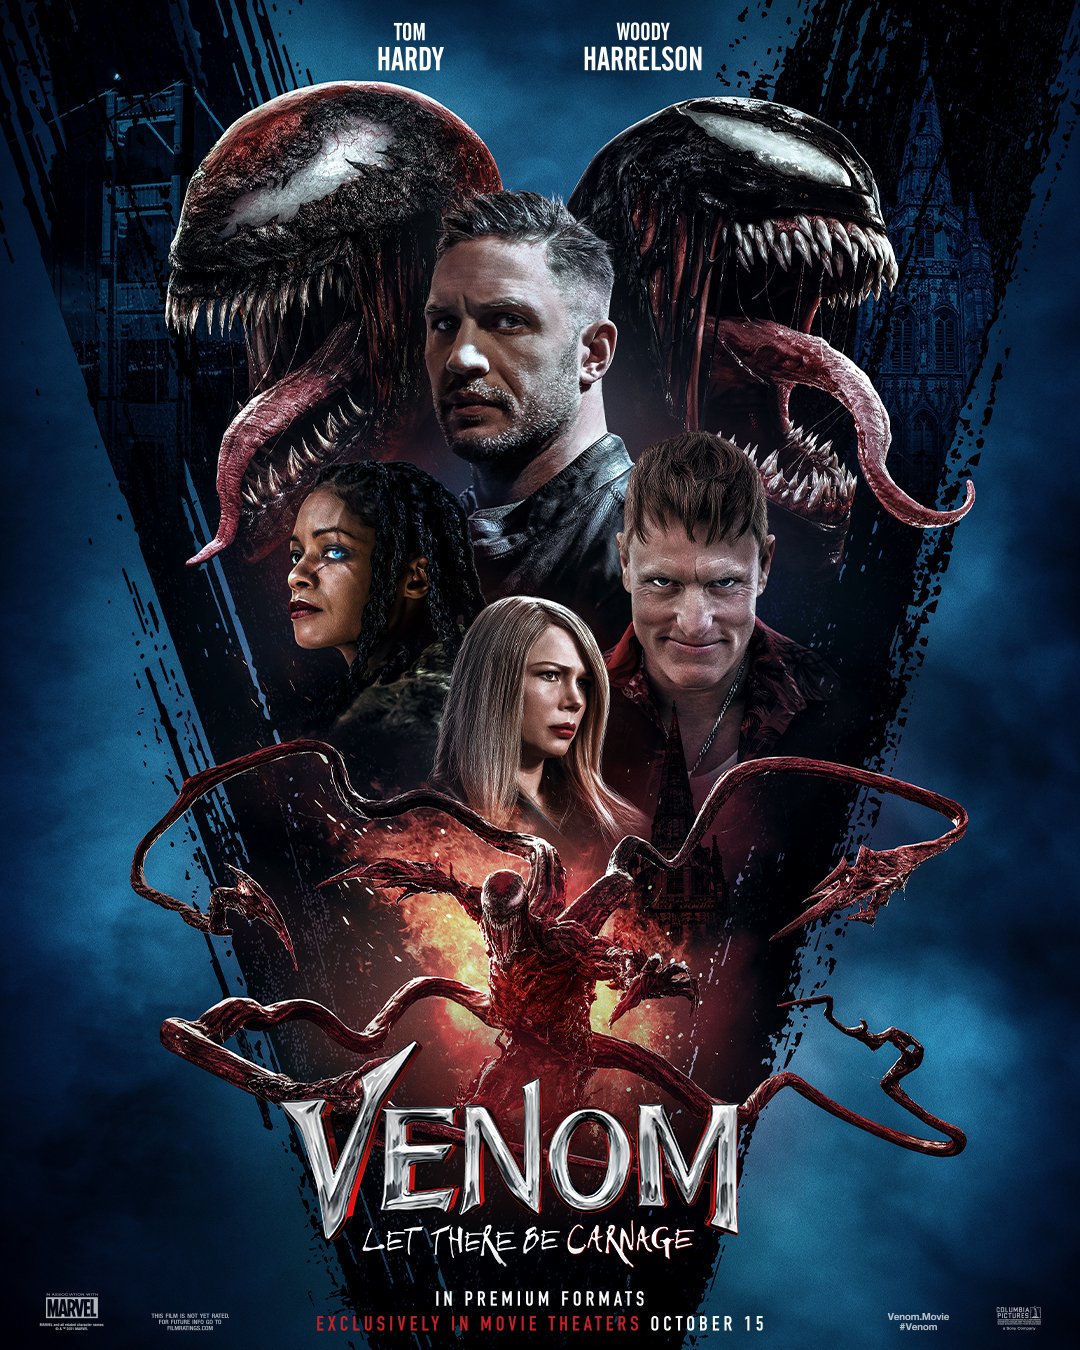 Stiahni si Filmy Kamera Venom 2: Carnage prichazi / Venom: Let There Be Carnage (EN)(2021)(KINORip)